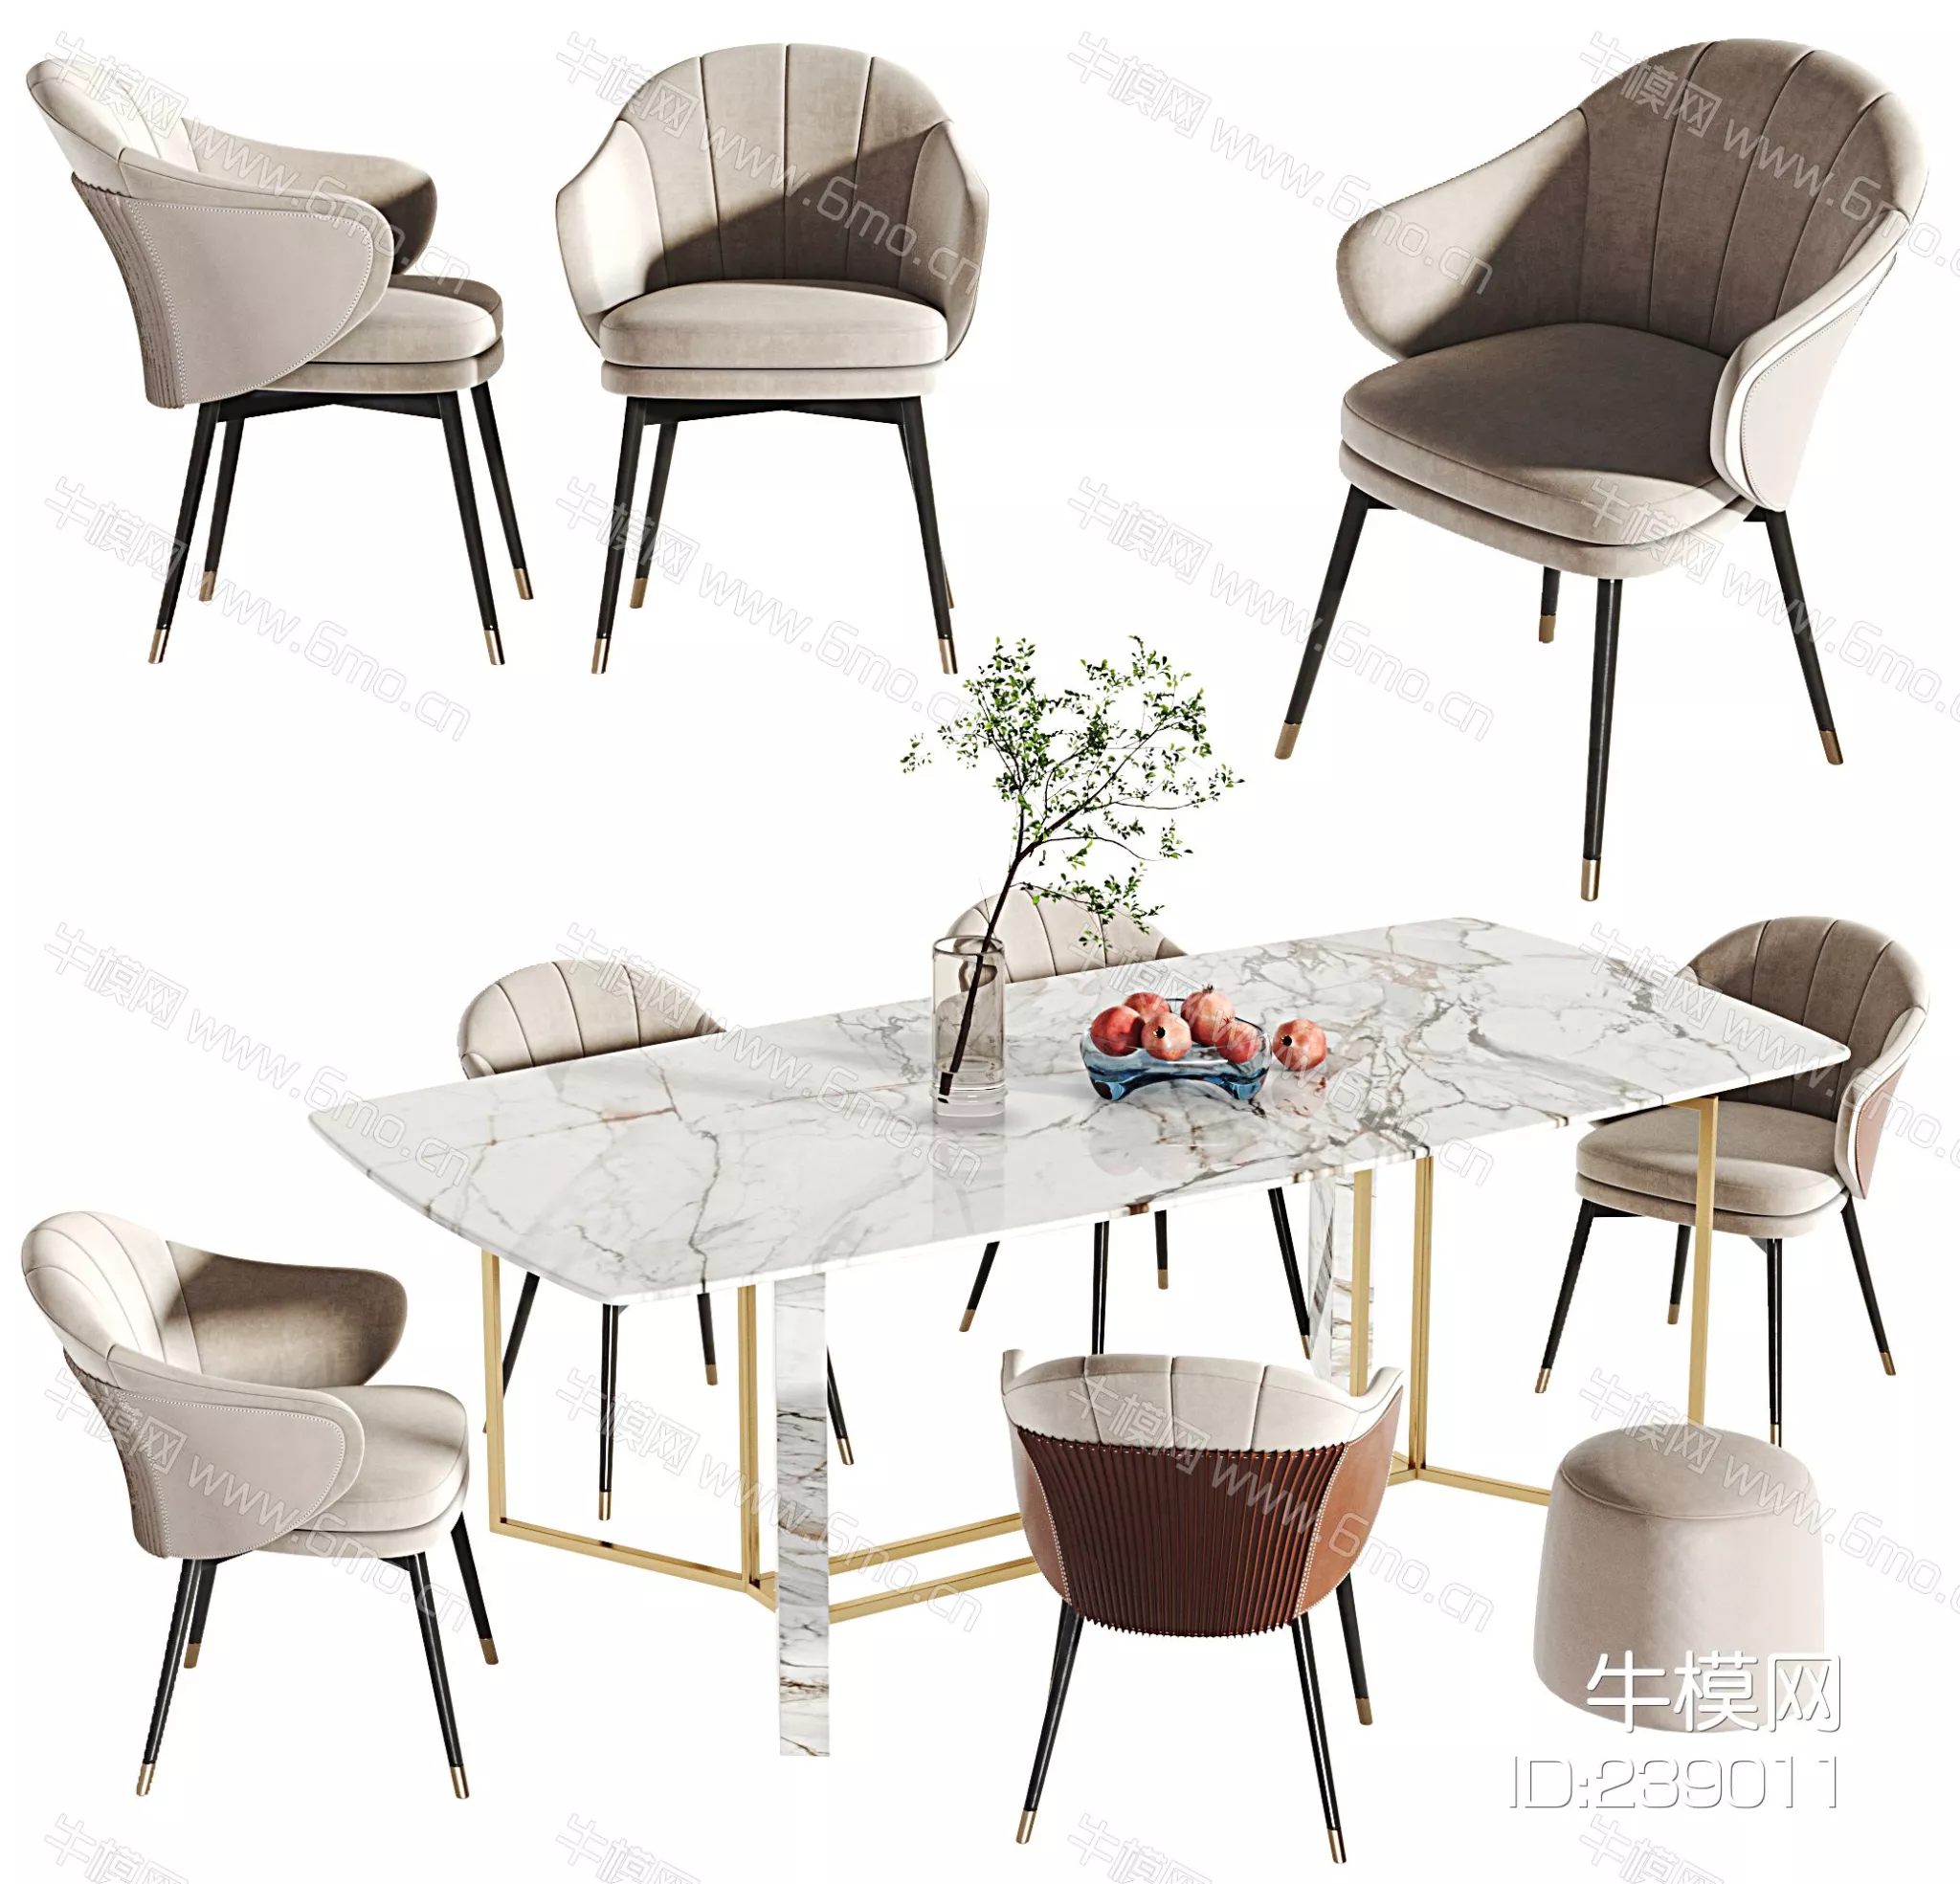 MODERN DINING TABLE SET - SKETCHUP 3D MODEL - VRAY - 239011